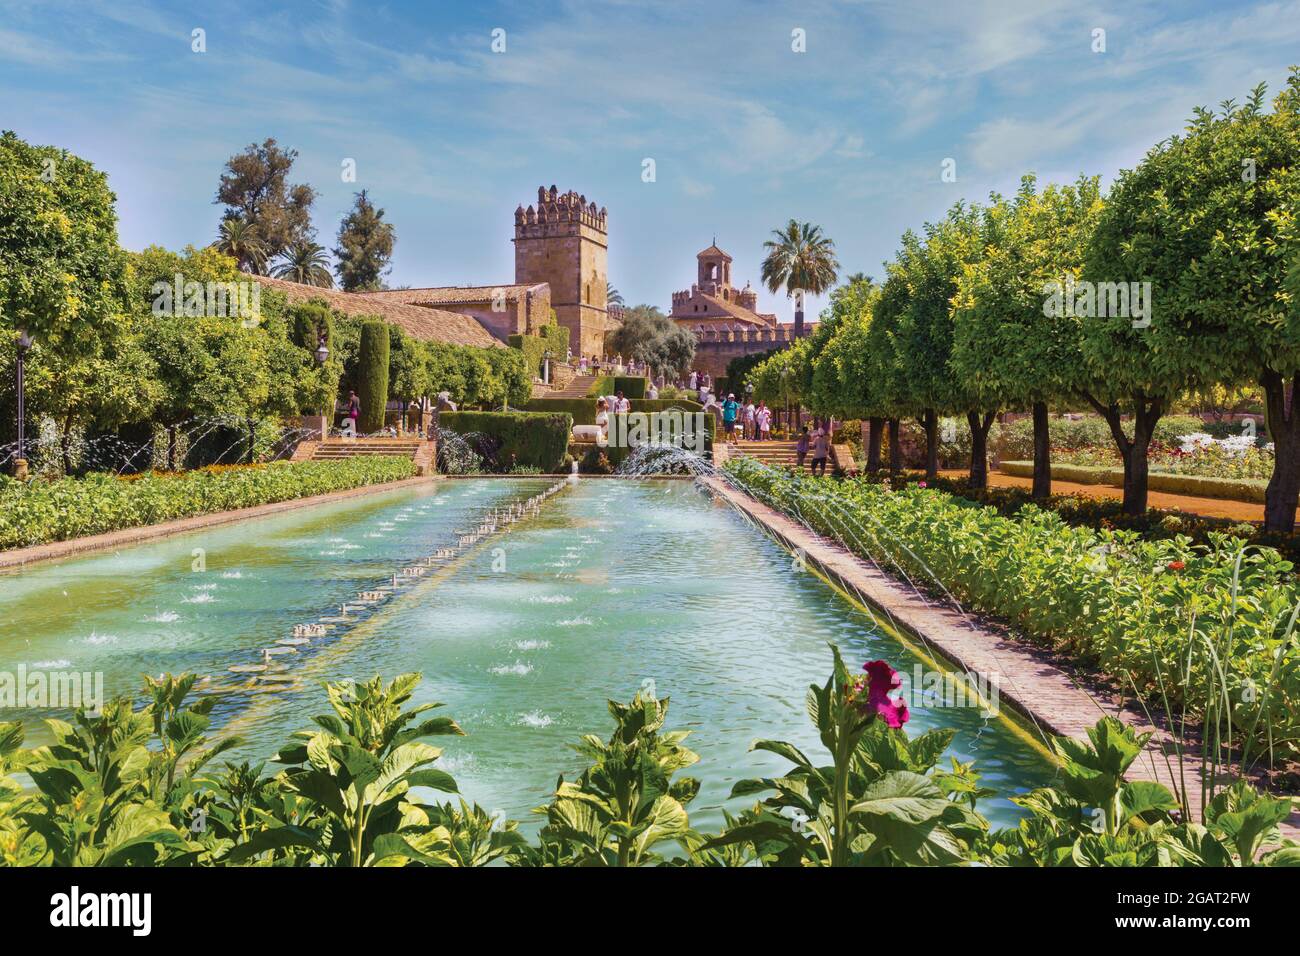 Pool in the Lower Garden, Alcazar de los Reyes Cristianos, Cordoba, Cordoba Province, Andalusia, Spain.  The Historic Centre of Cordoba is a UNESCO Wo Stock Photo